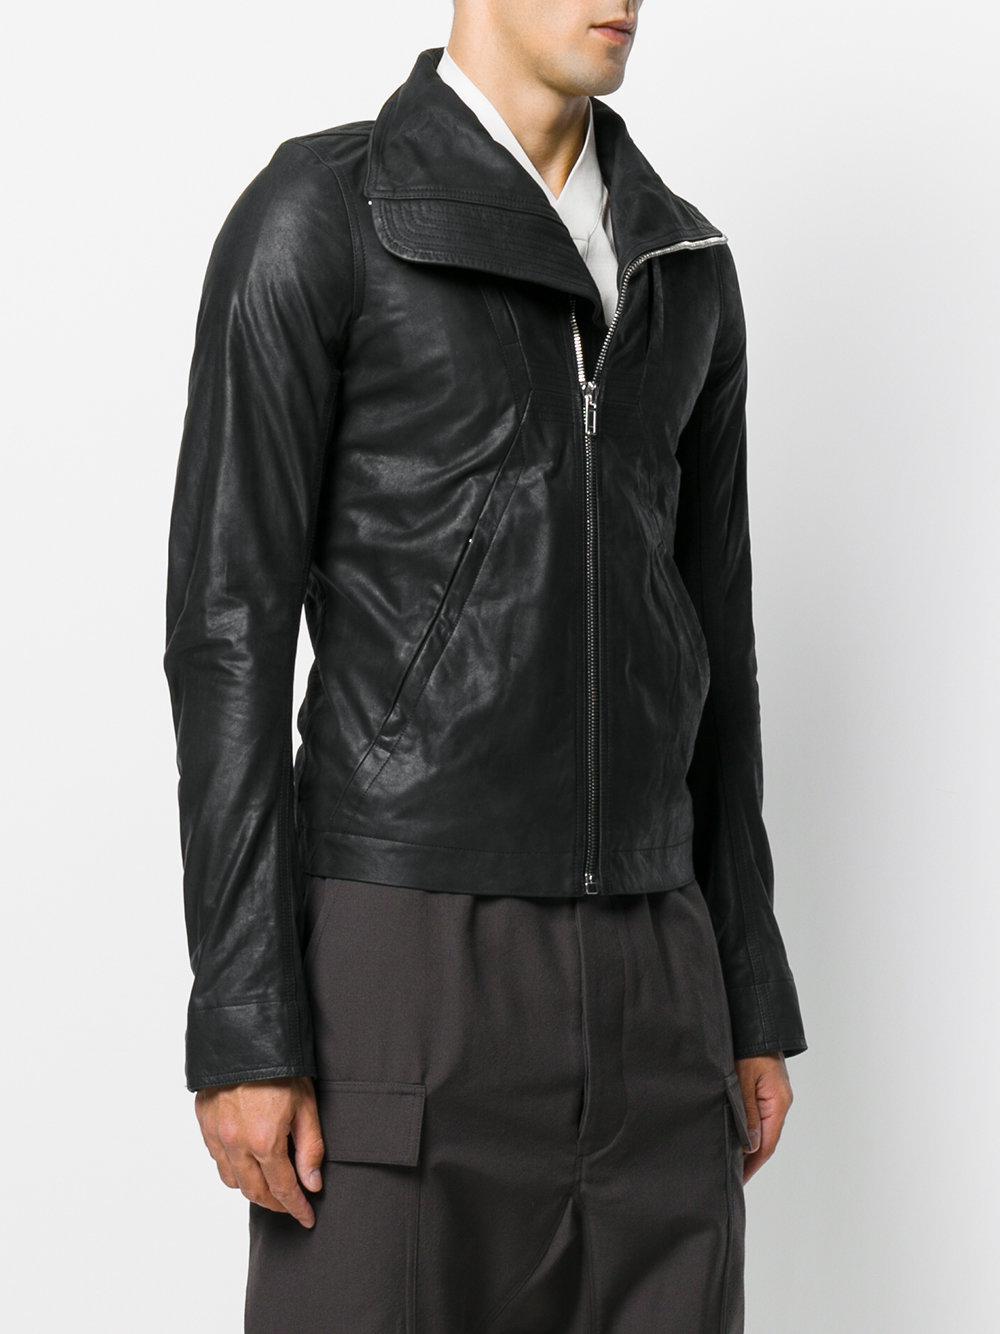 Rick Owens Leather Geo Jacket in Black for Men - Lyst